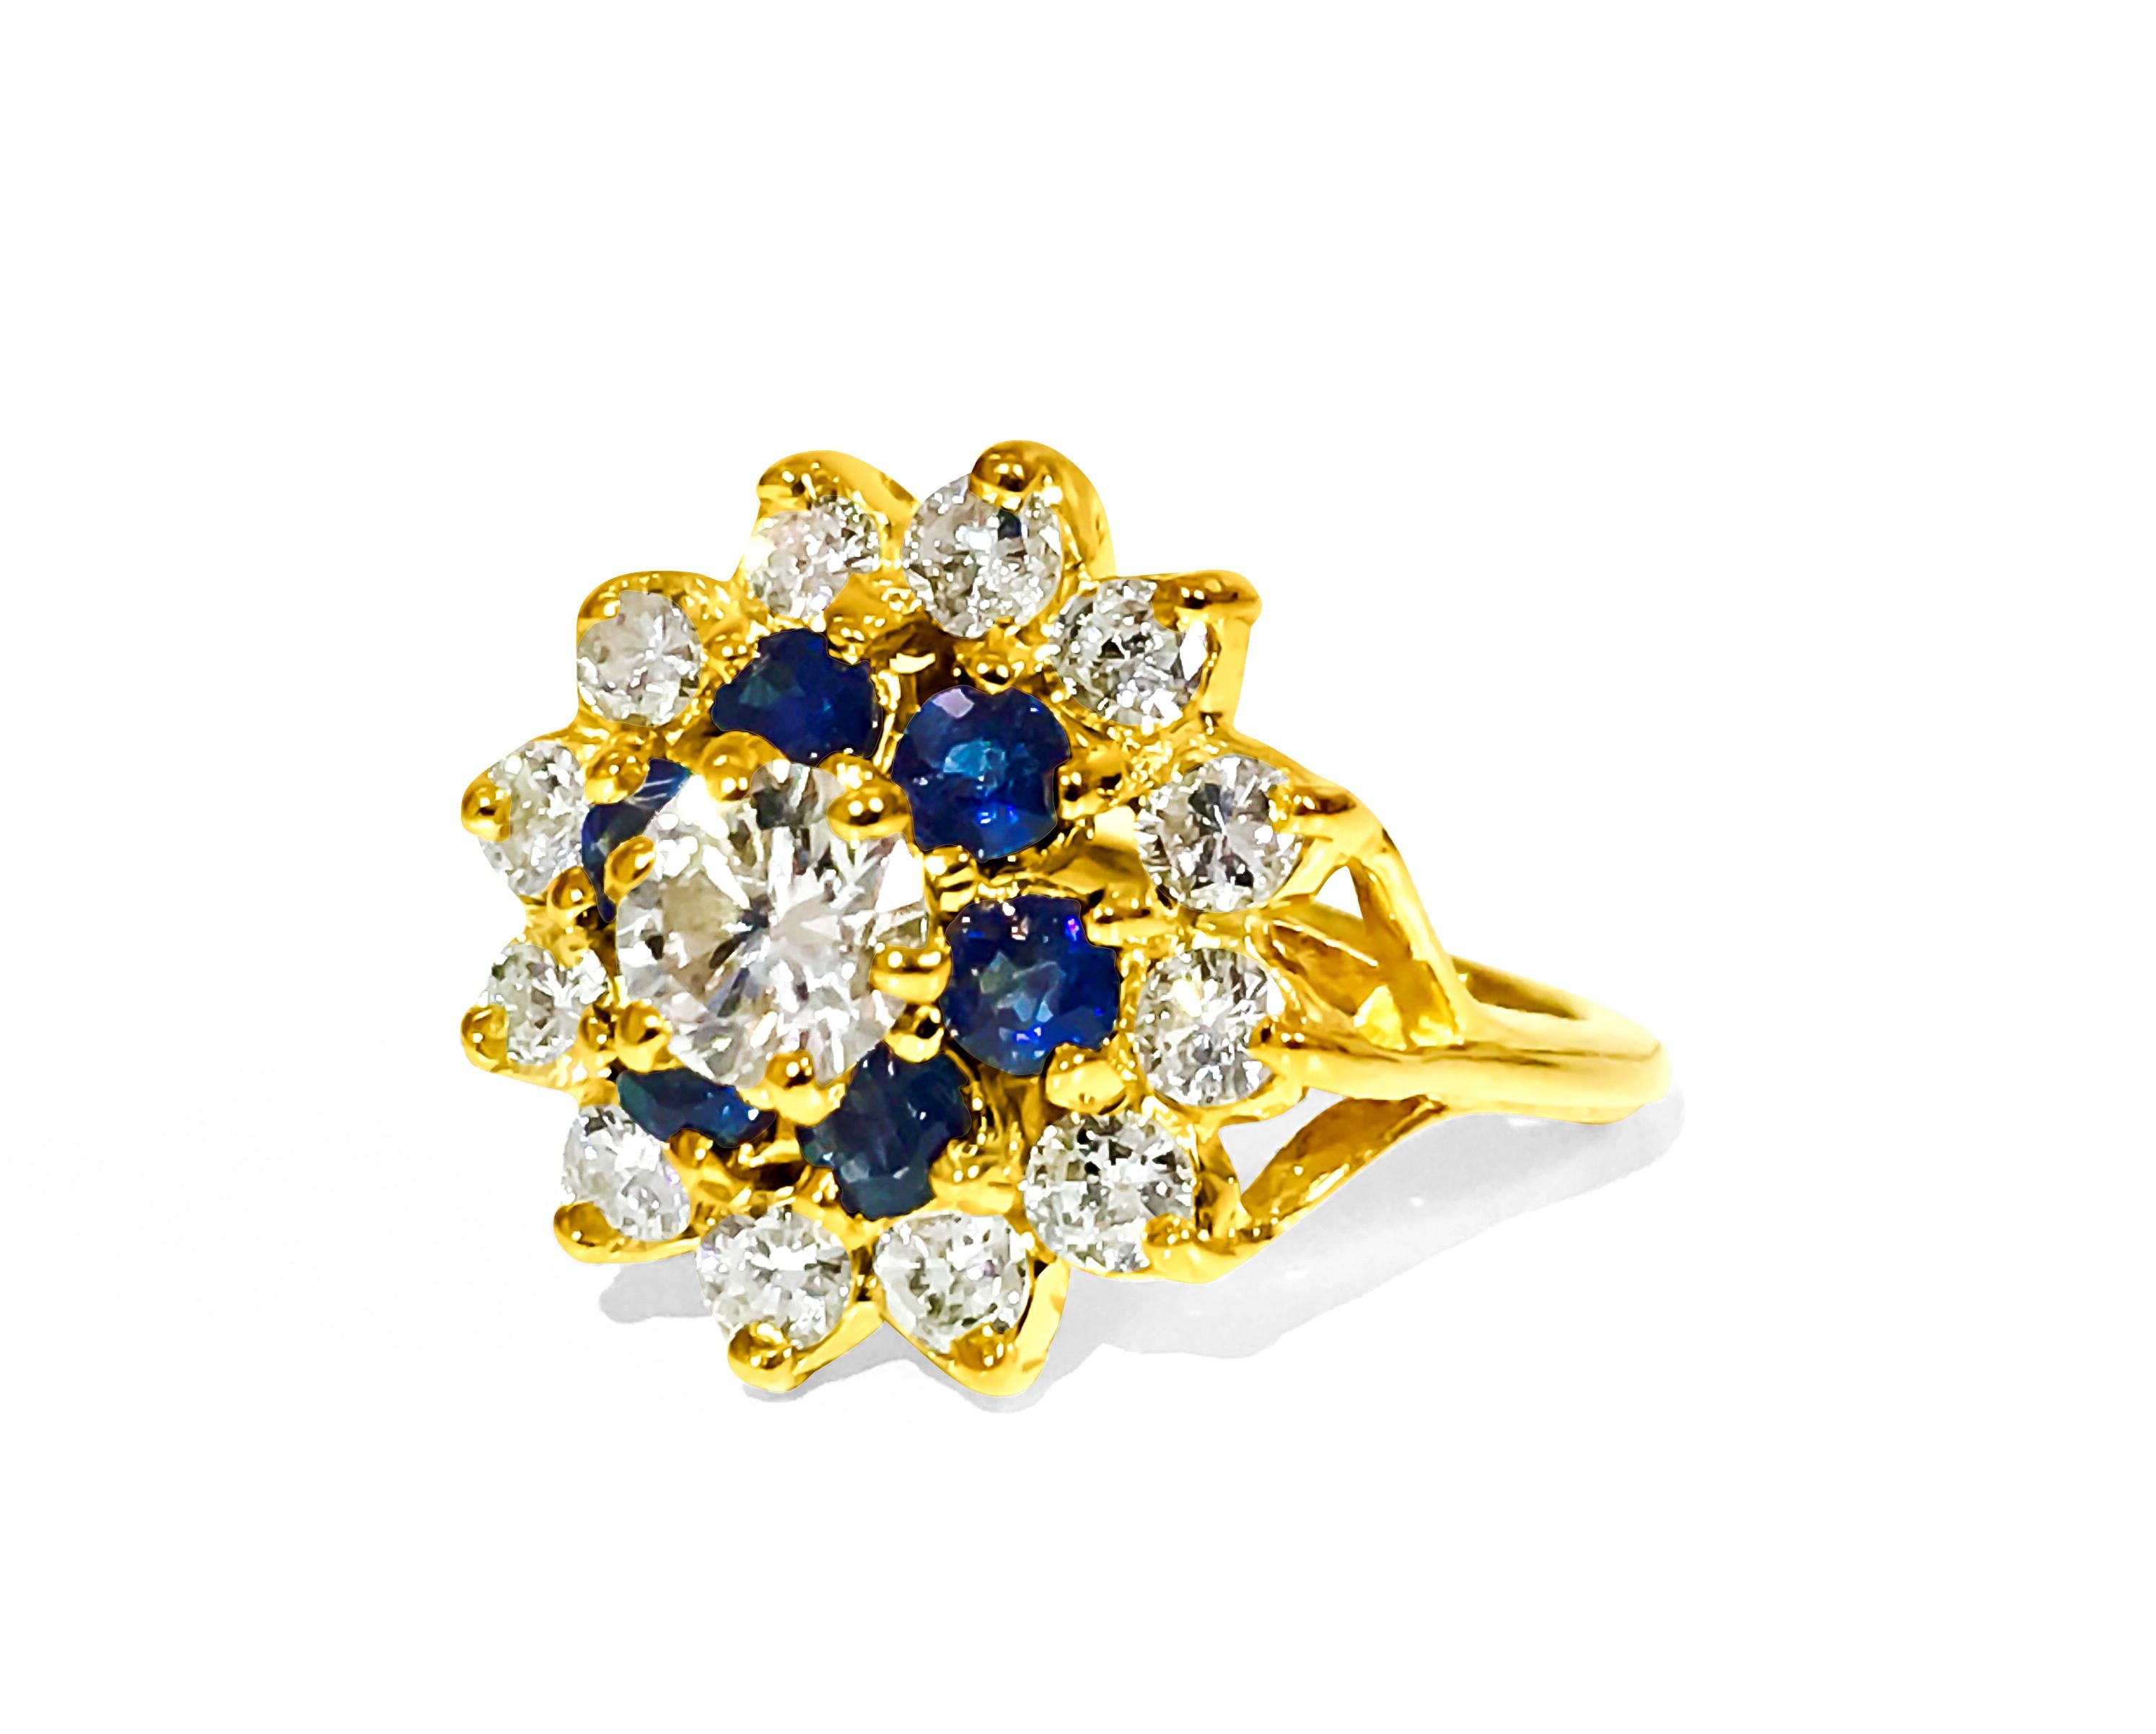 Contemporary 2.12 Carat Blue Sapphire Diamond Cocktail Ring 18 Karat Yellow Gold For Sale